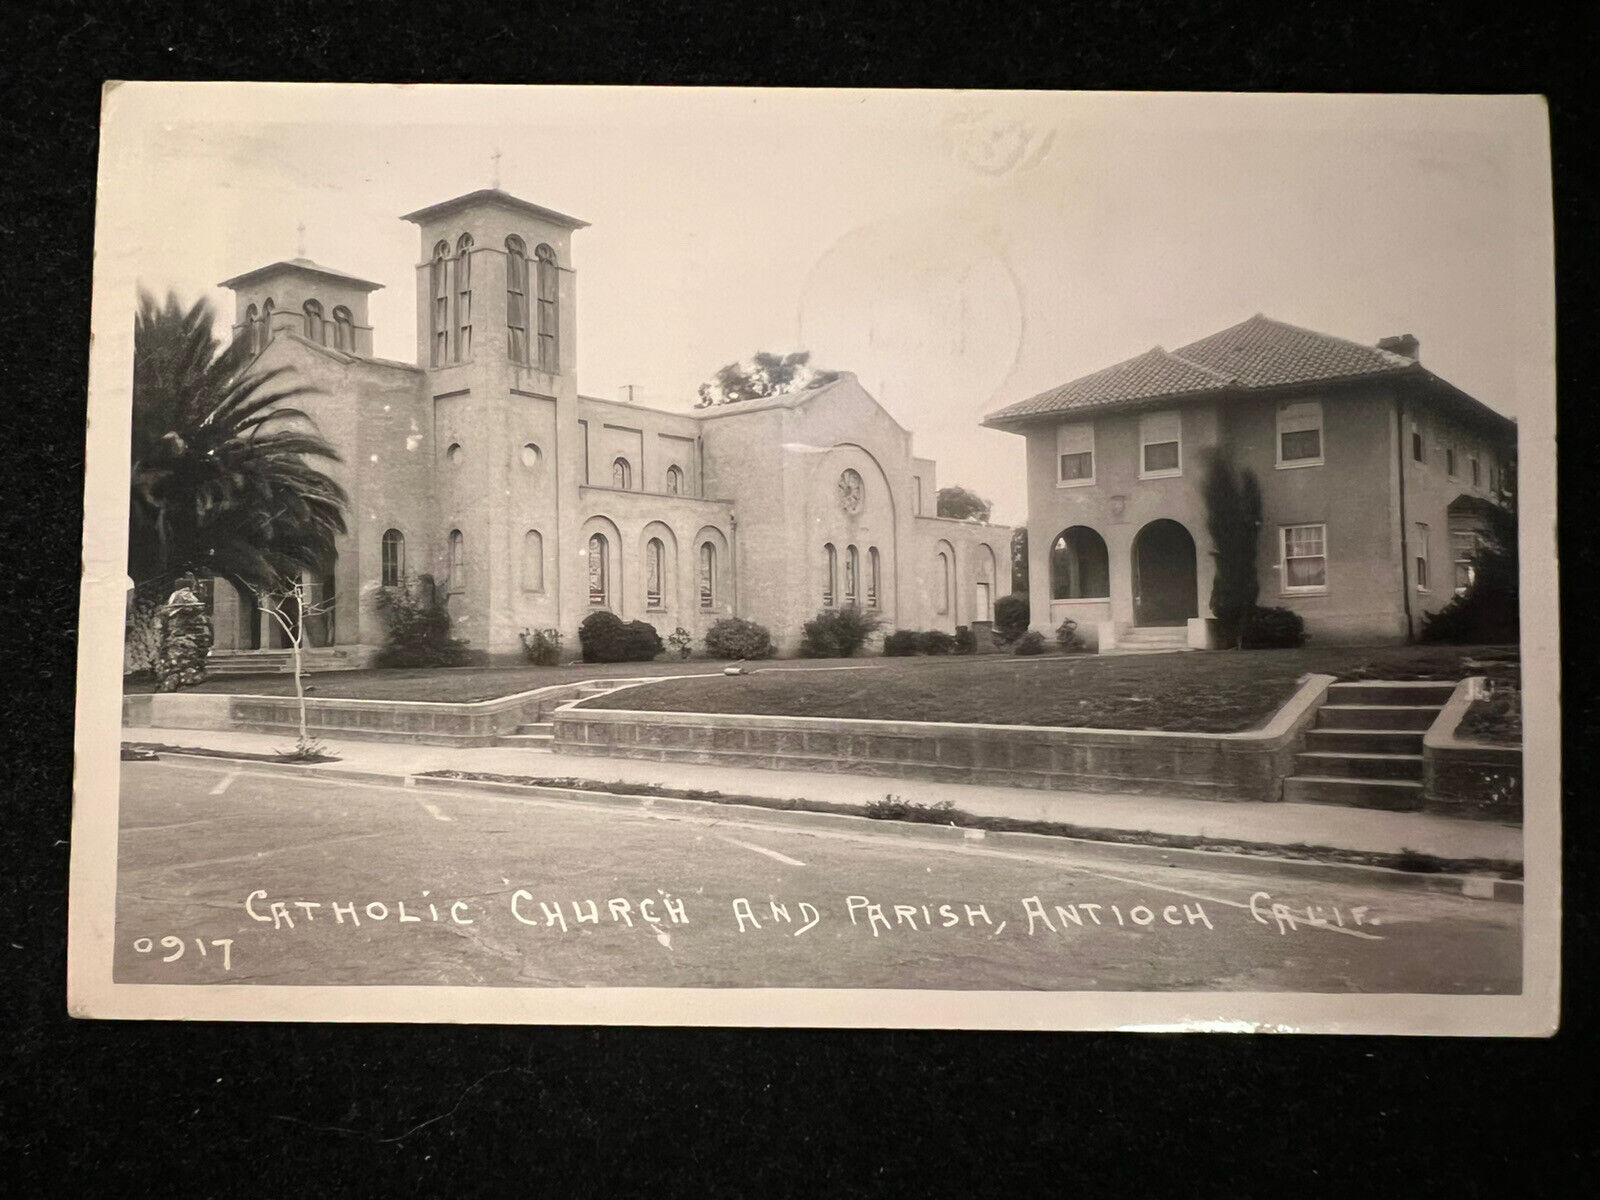 1951 RPPC PHOTO POSTCARD CATHOLIC CHURCH & PARISH ANTIOCH CALIFORNIA - J648